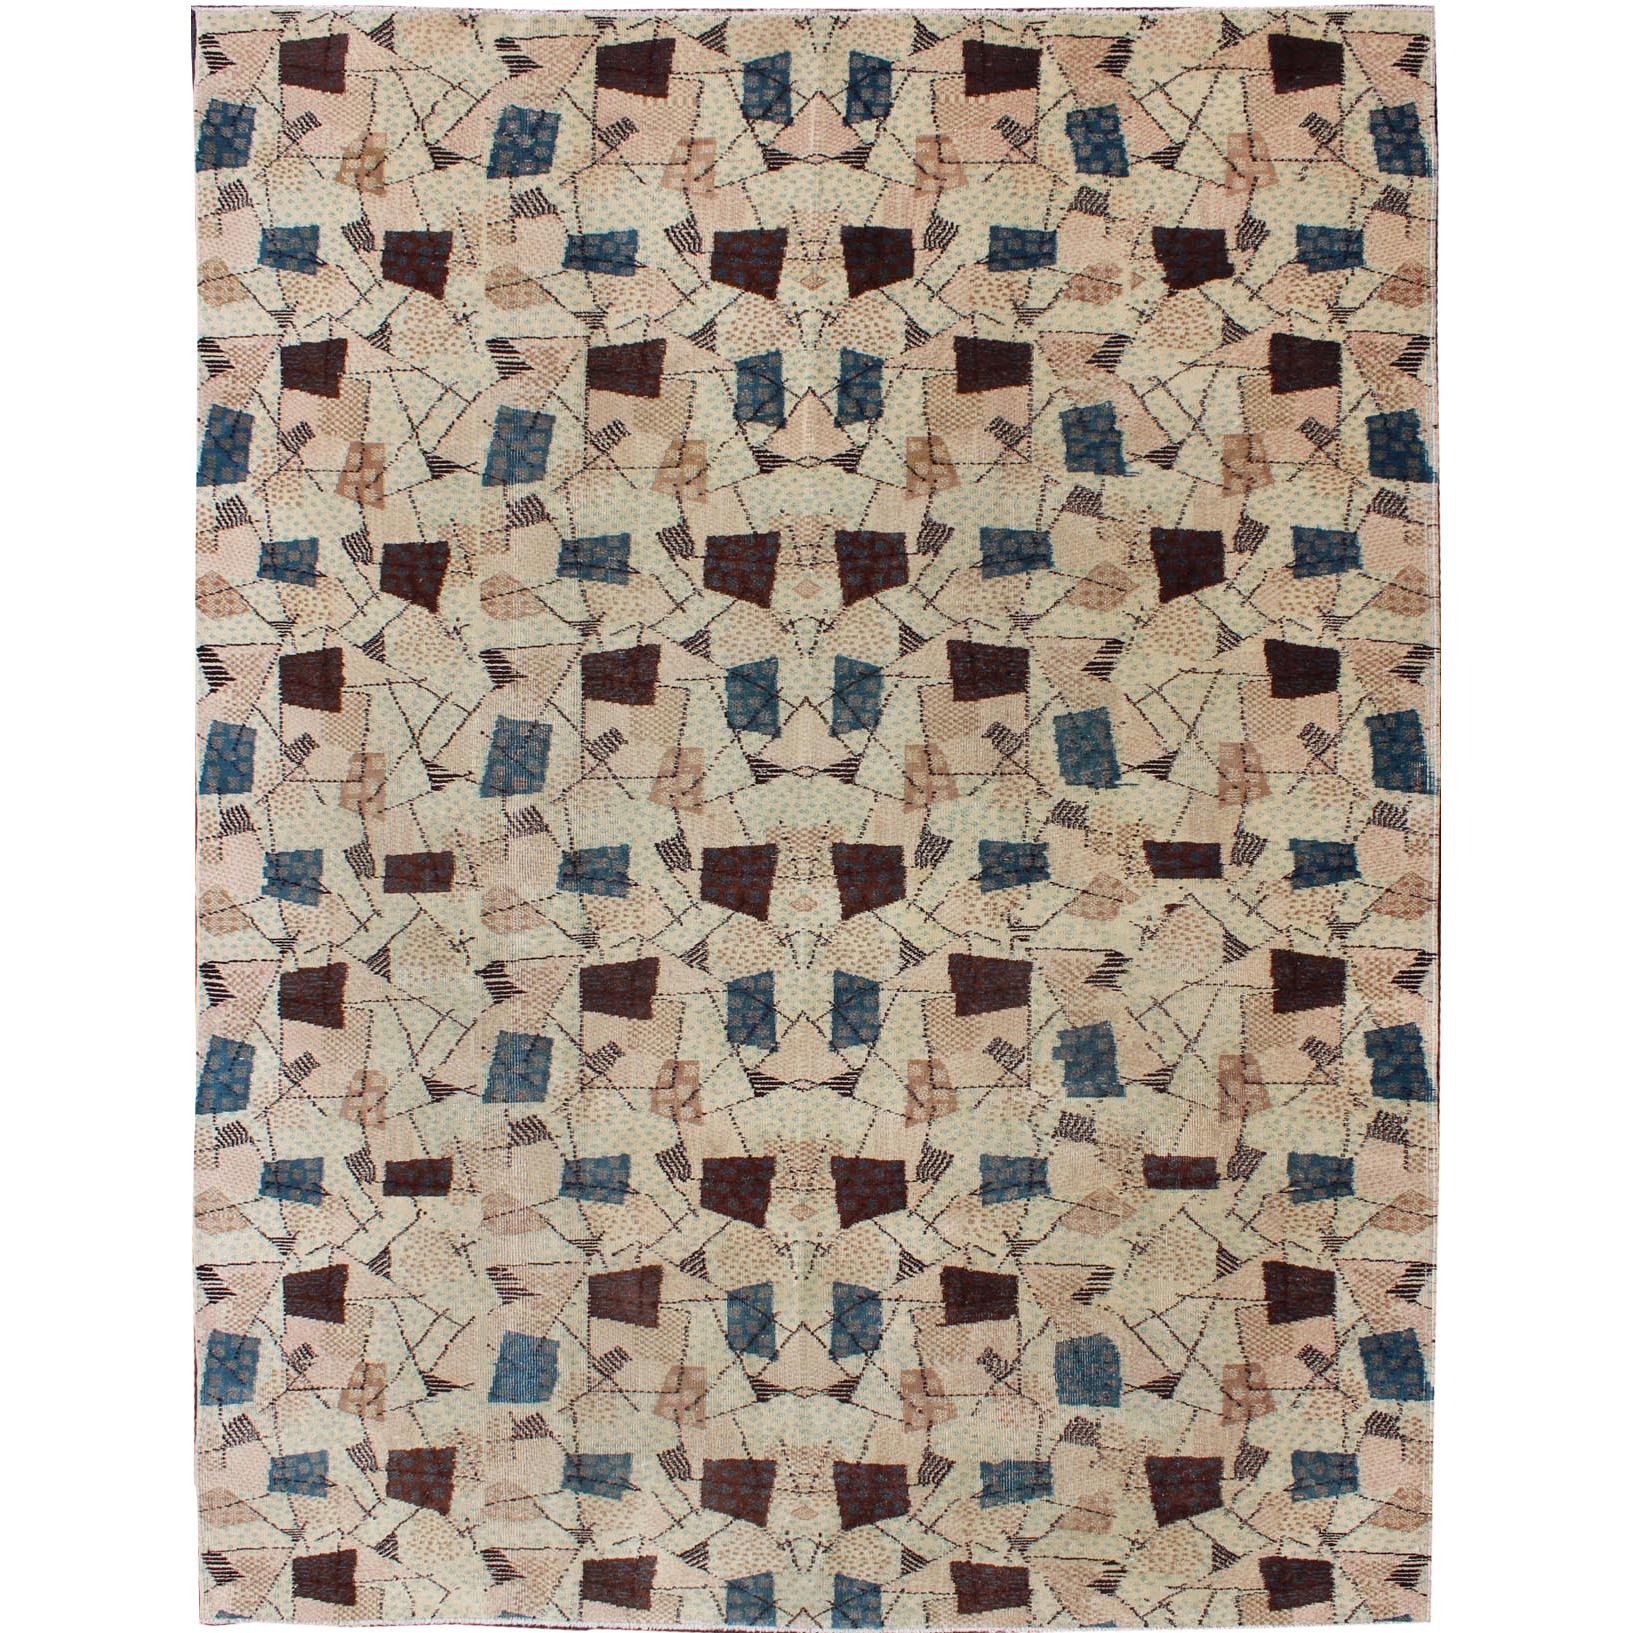 Vintage Turkish rug with Mid-Century Modern Design in Dusty Blue, Brown, L.Green